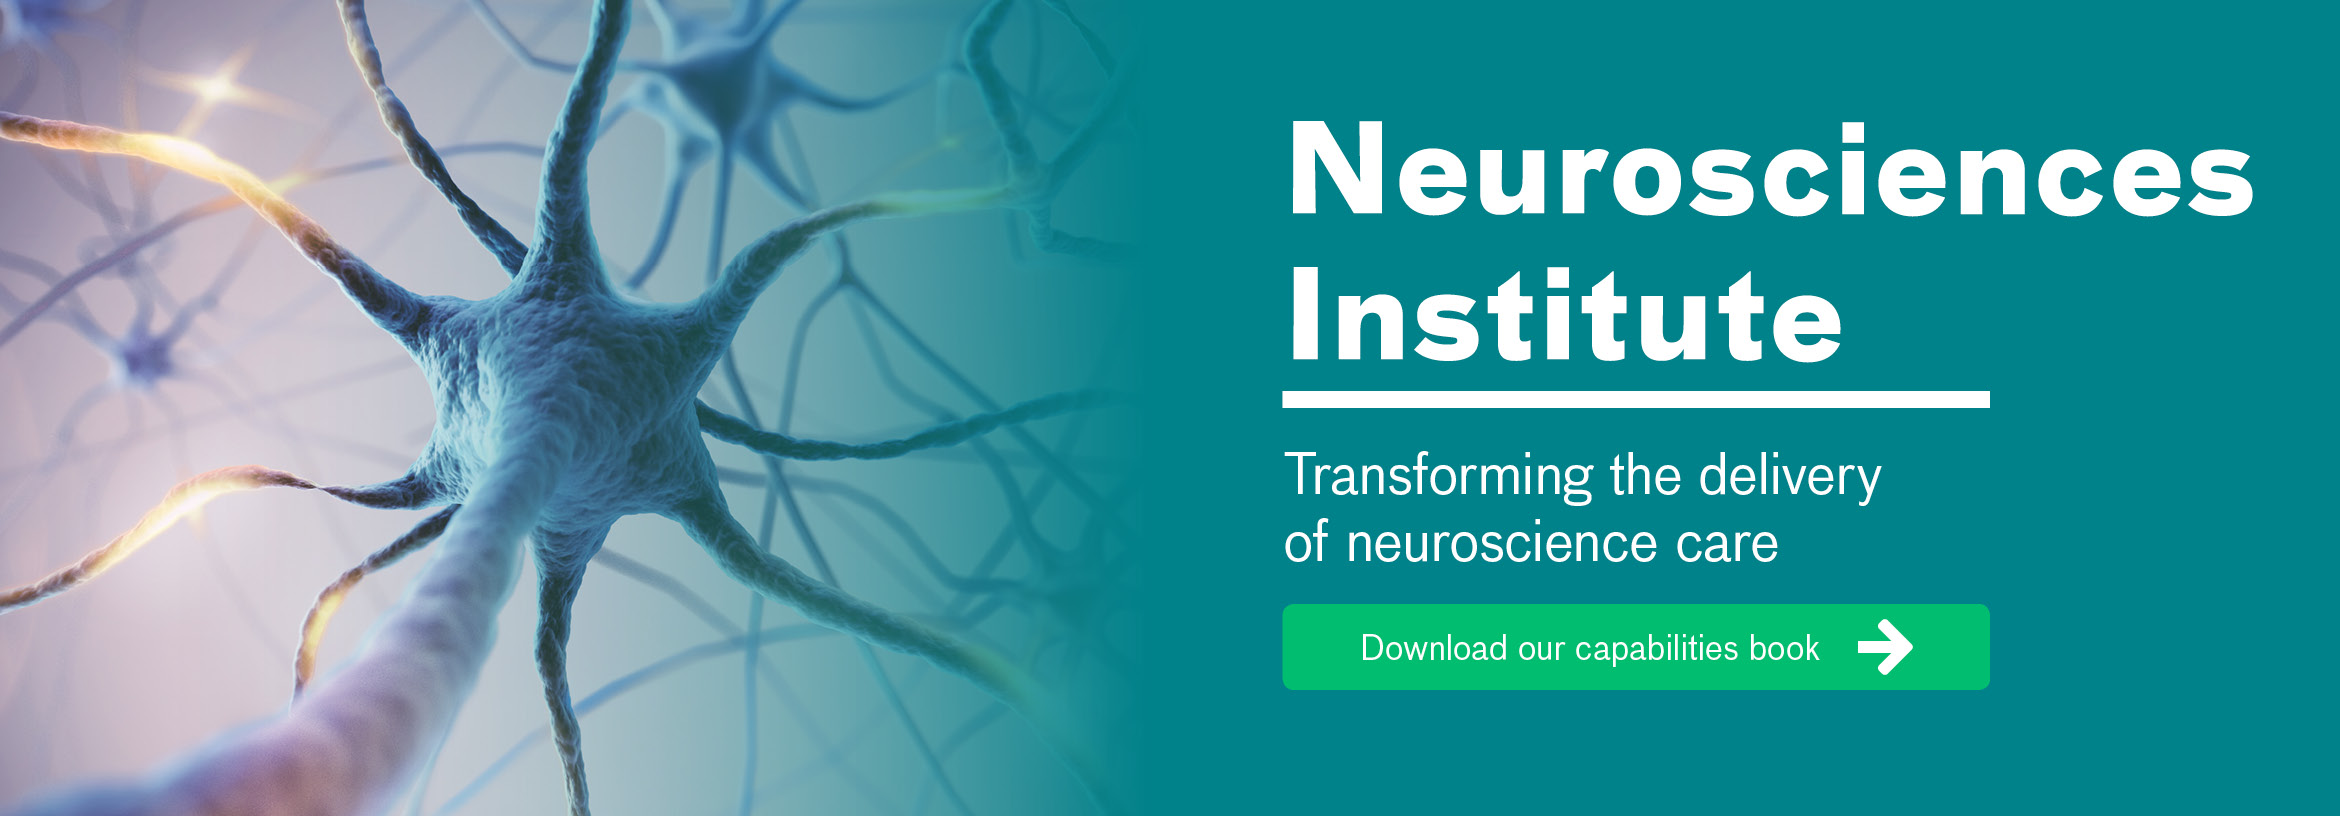 Neuroscience Experts | Neurosciences Institute